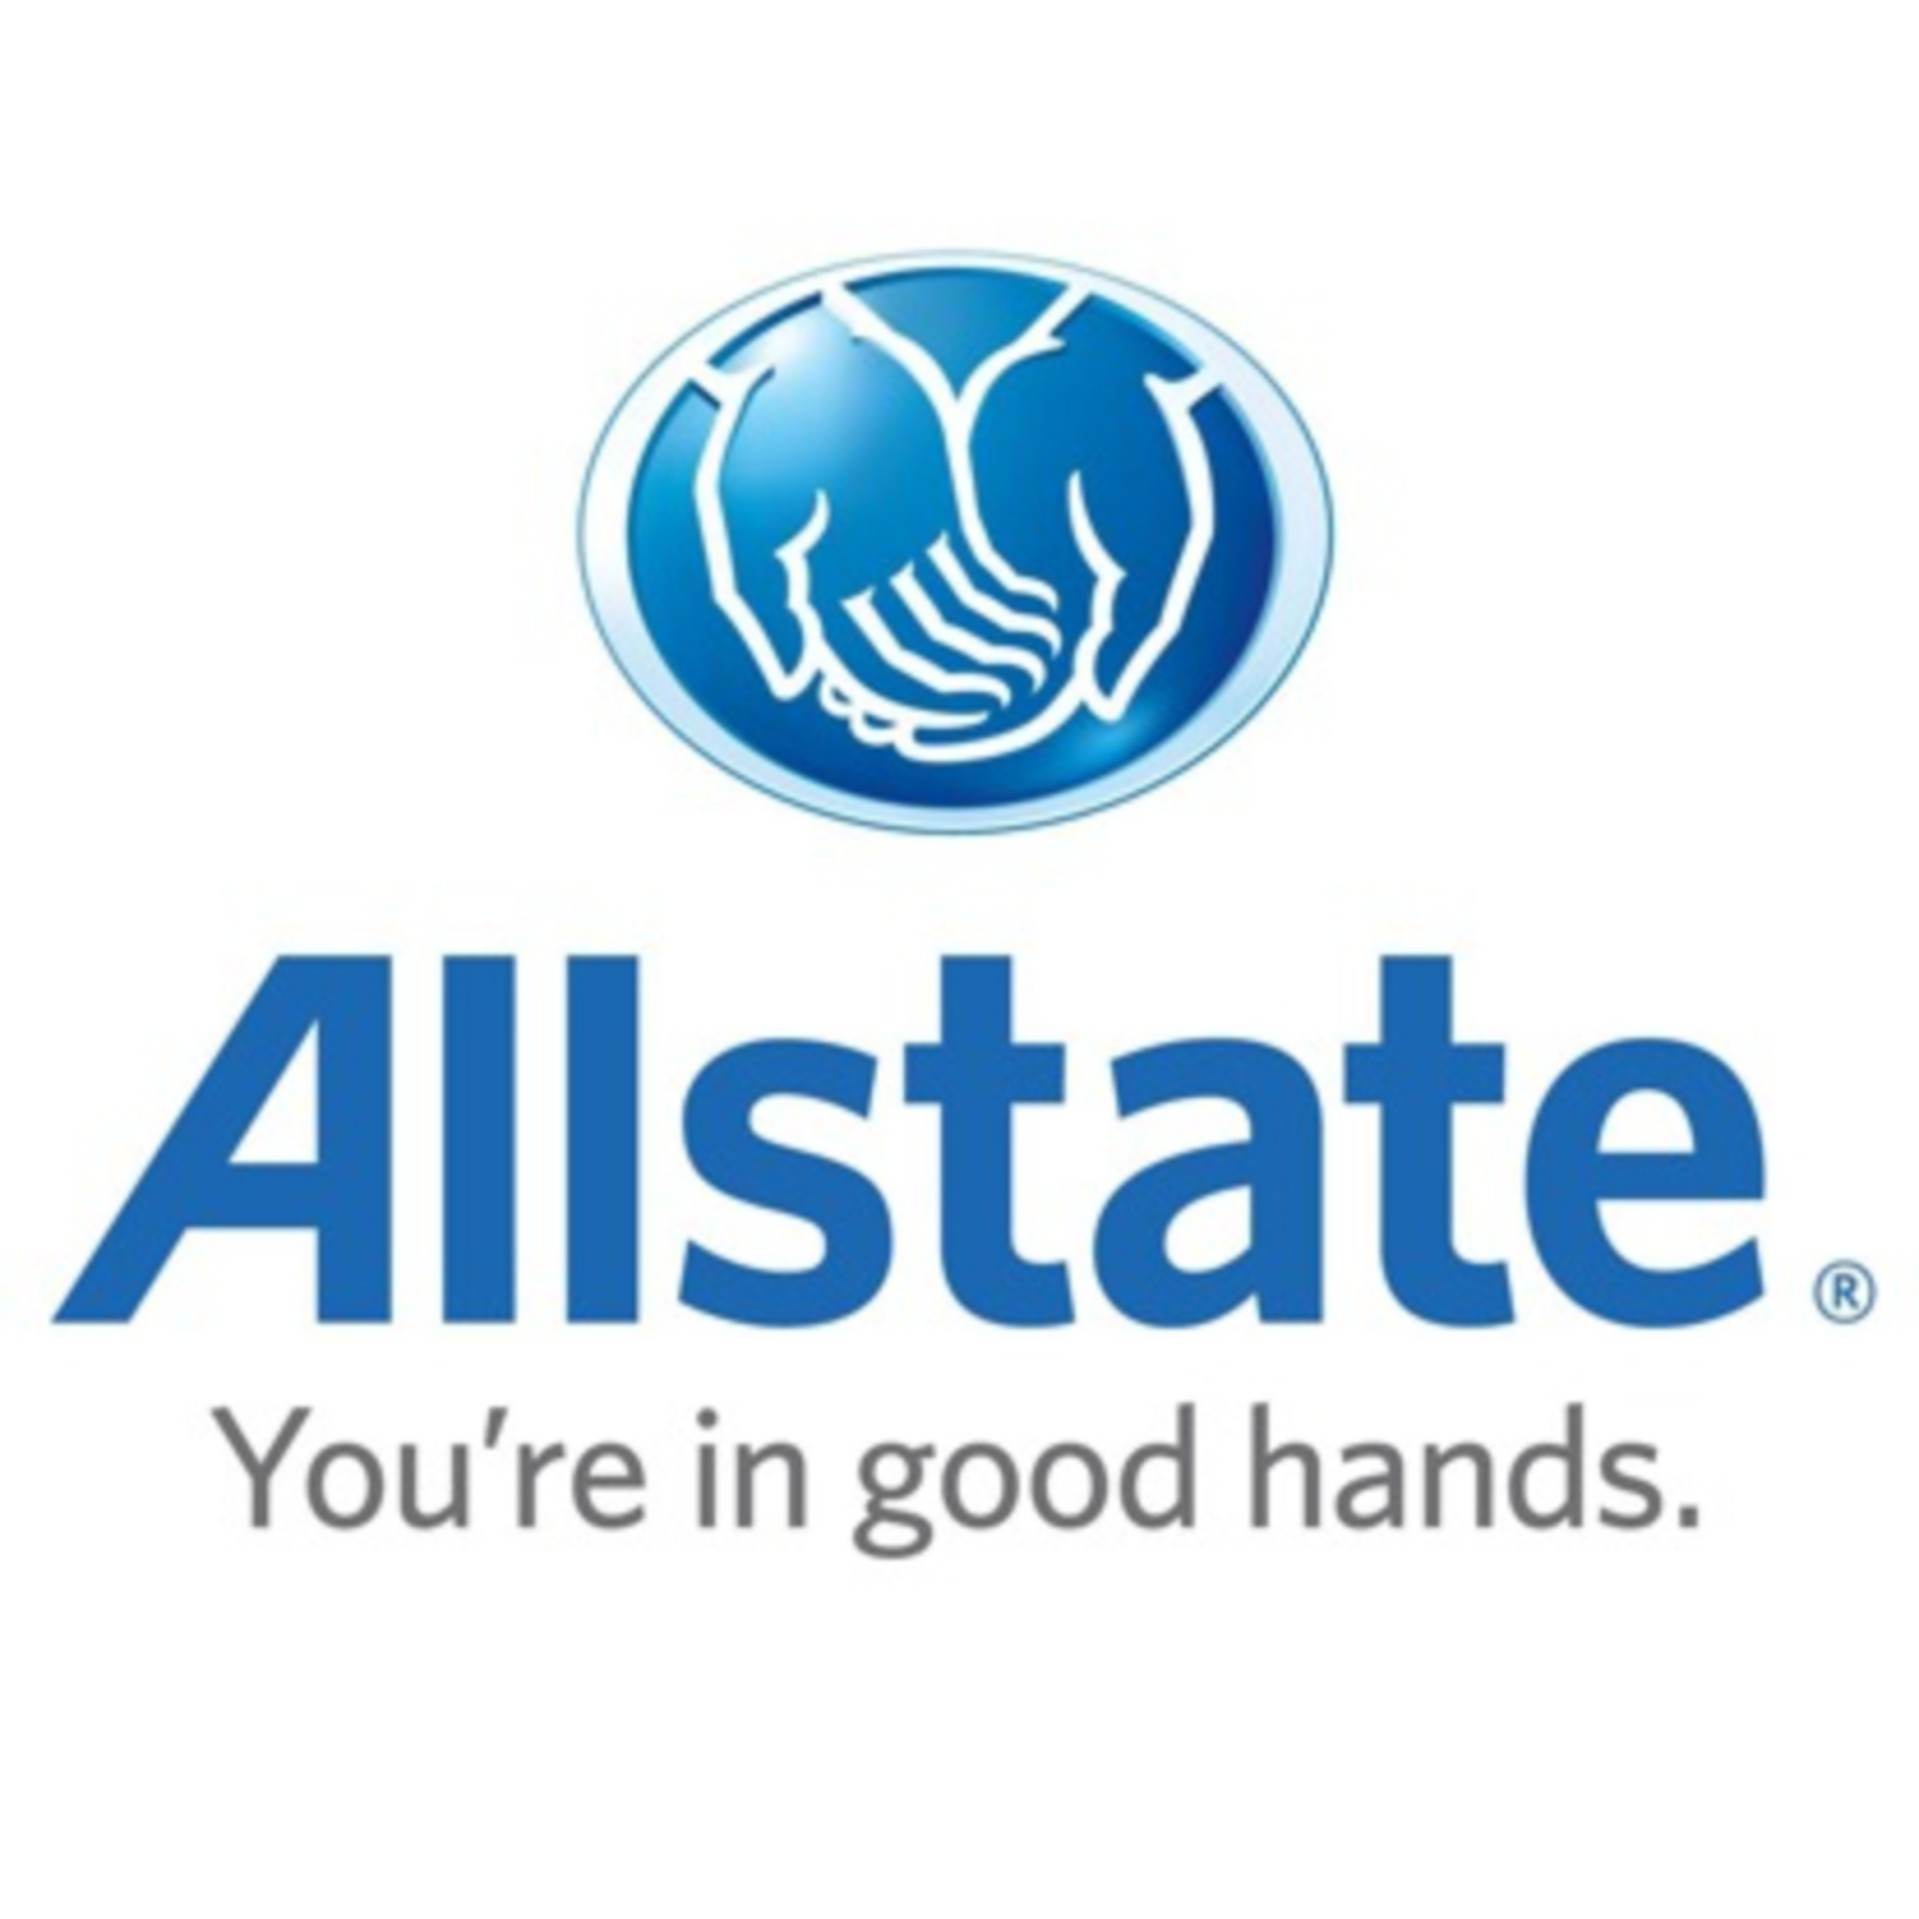 allstate-416x416.jpg